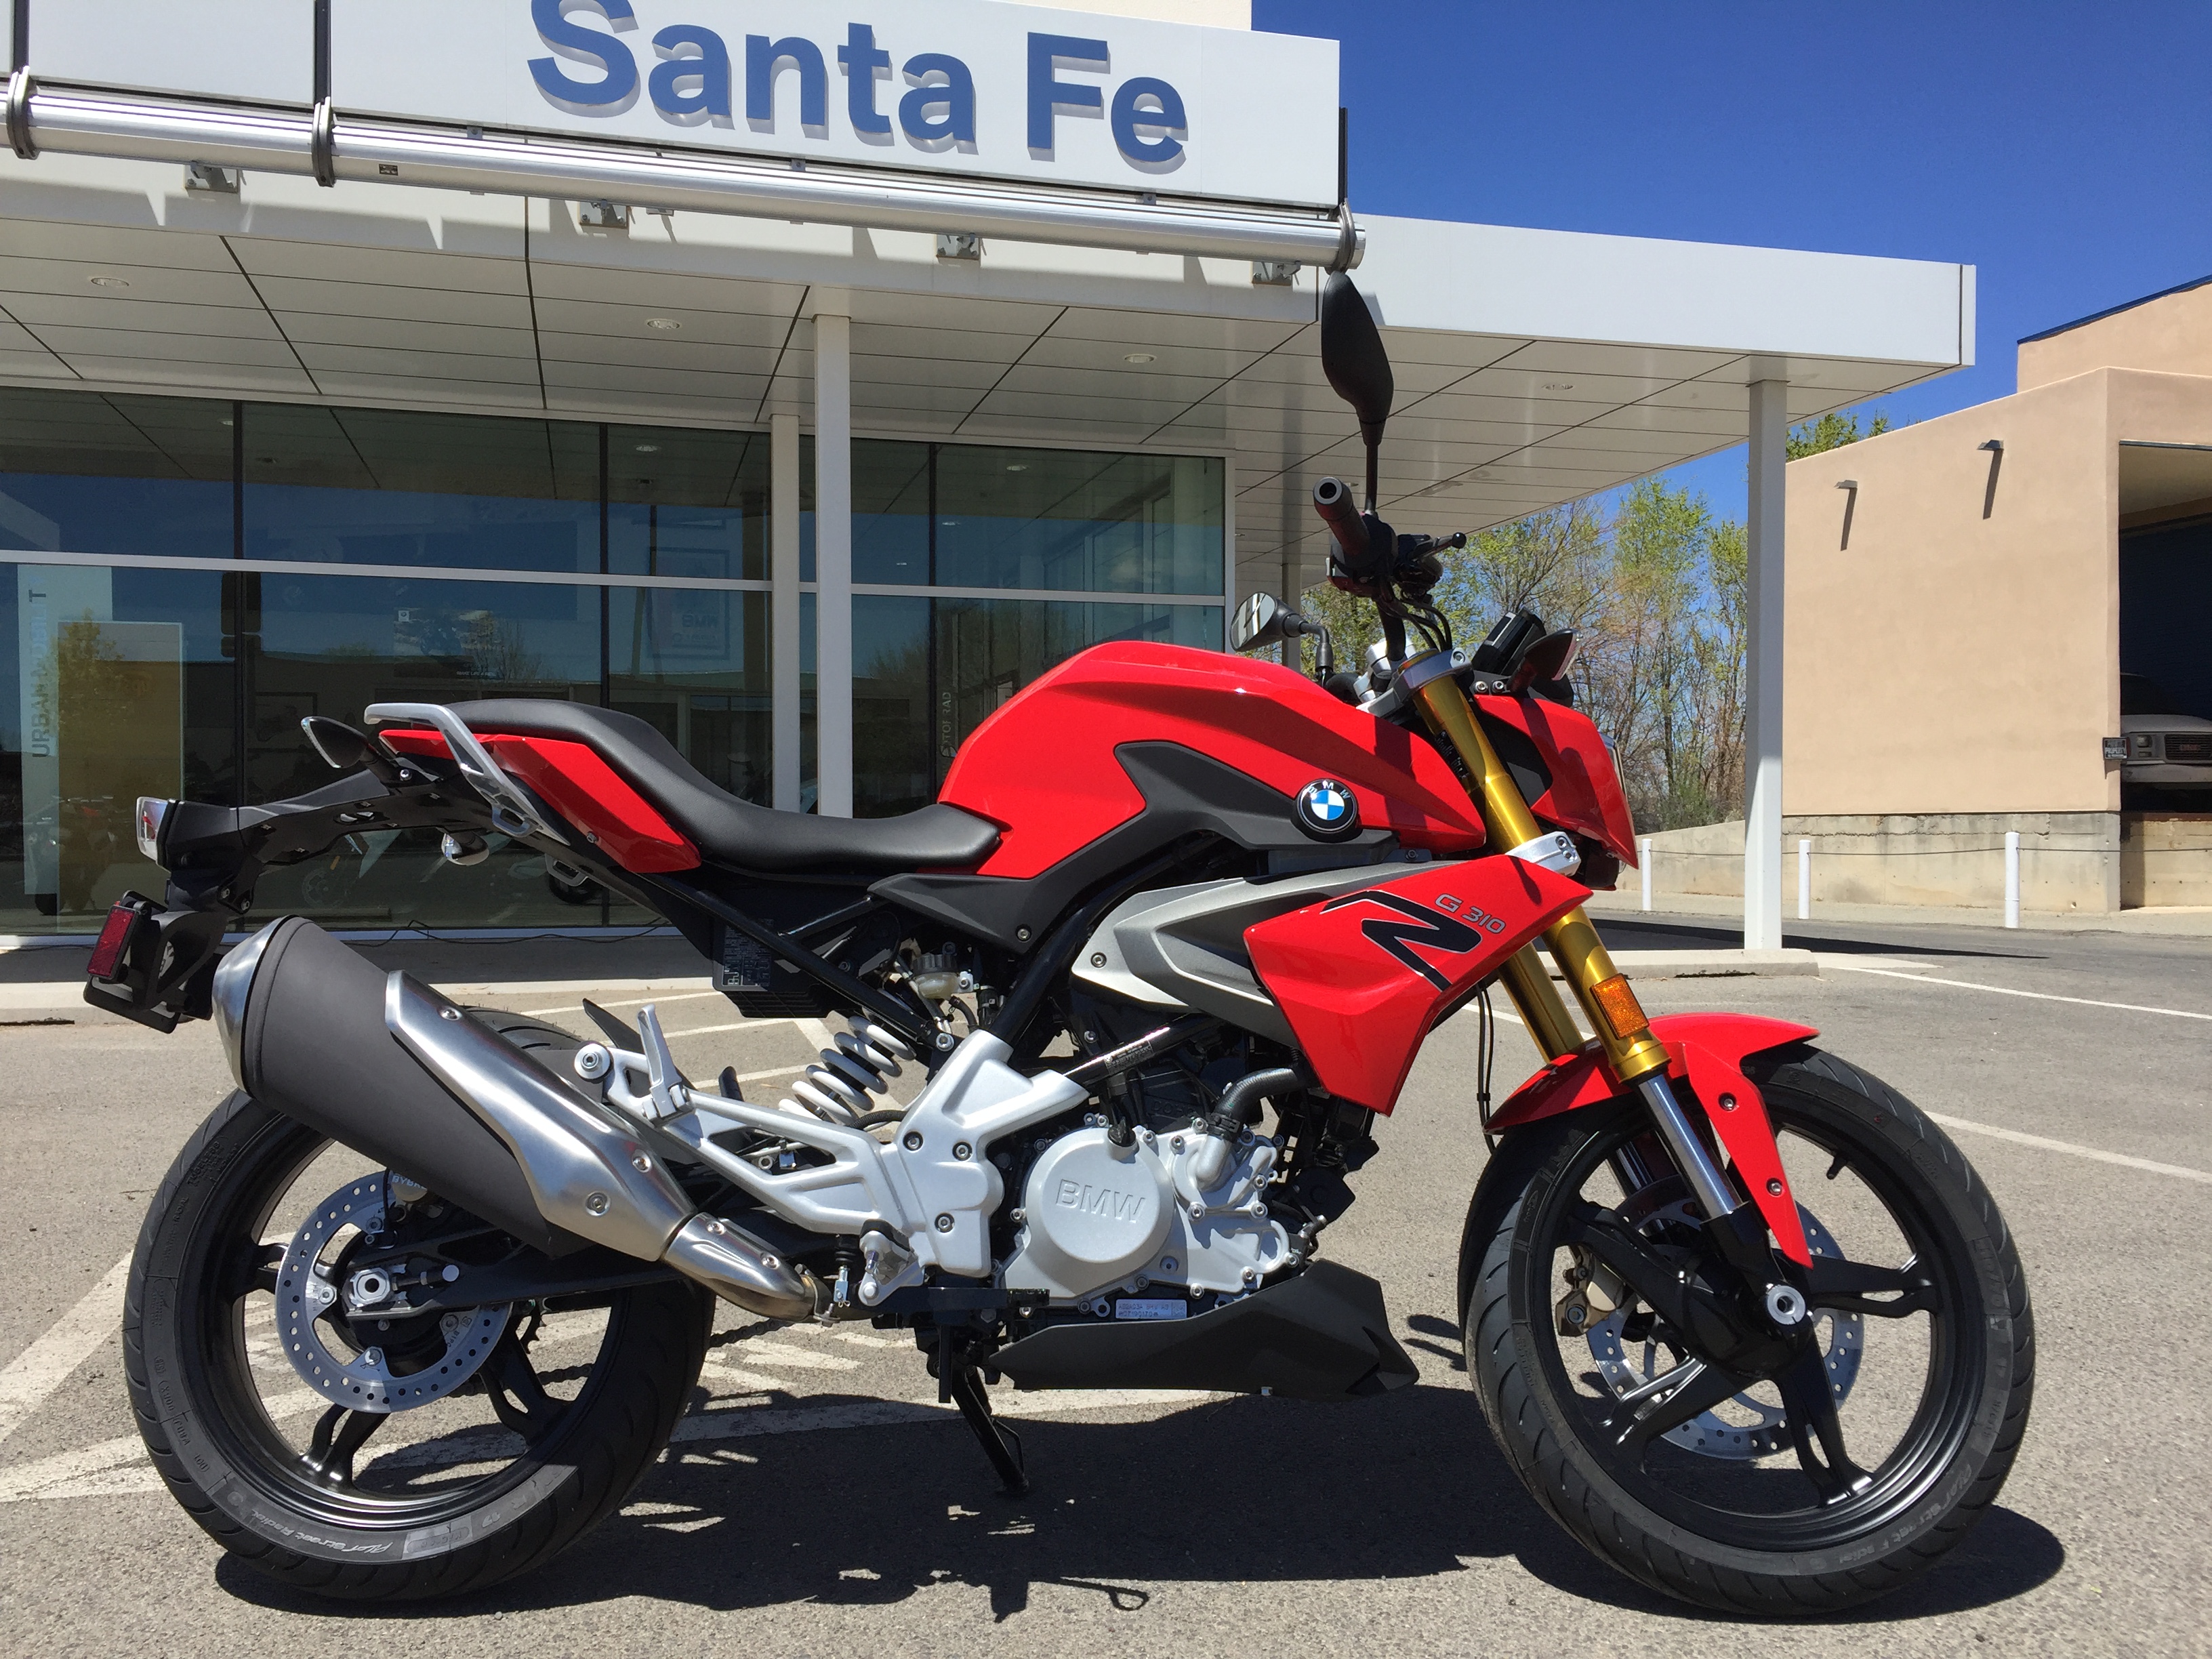 New BMW Motorcycles - M/C | Santa Fe BMW Motorcycles | Santa Fe, NM